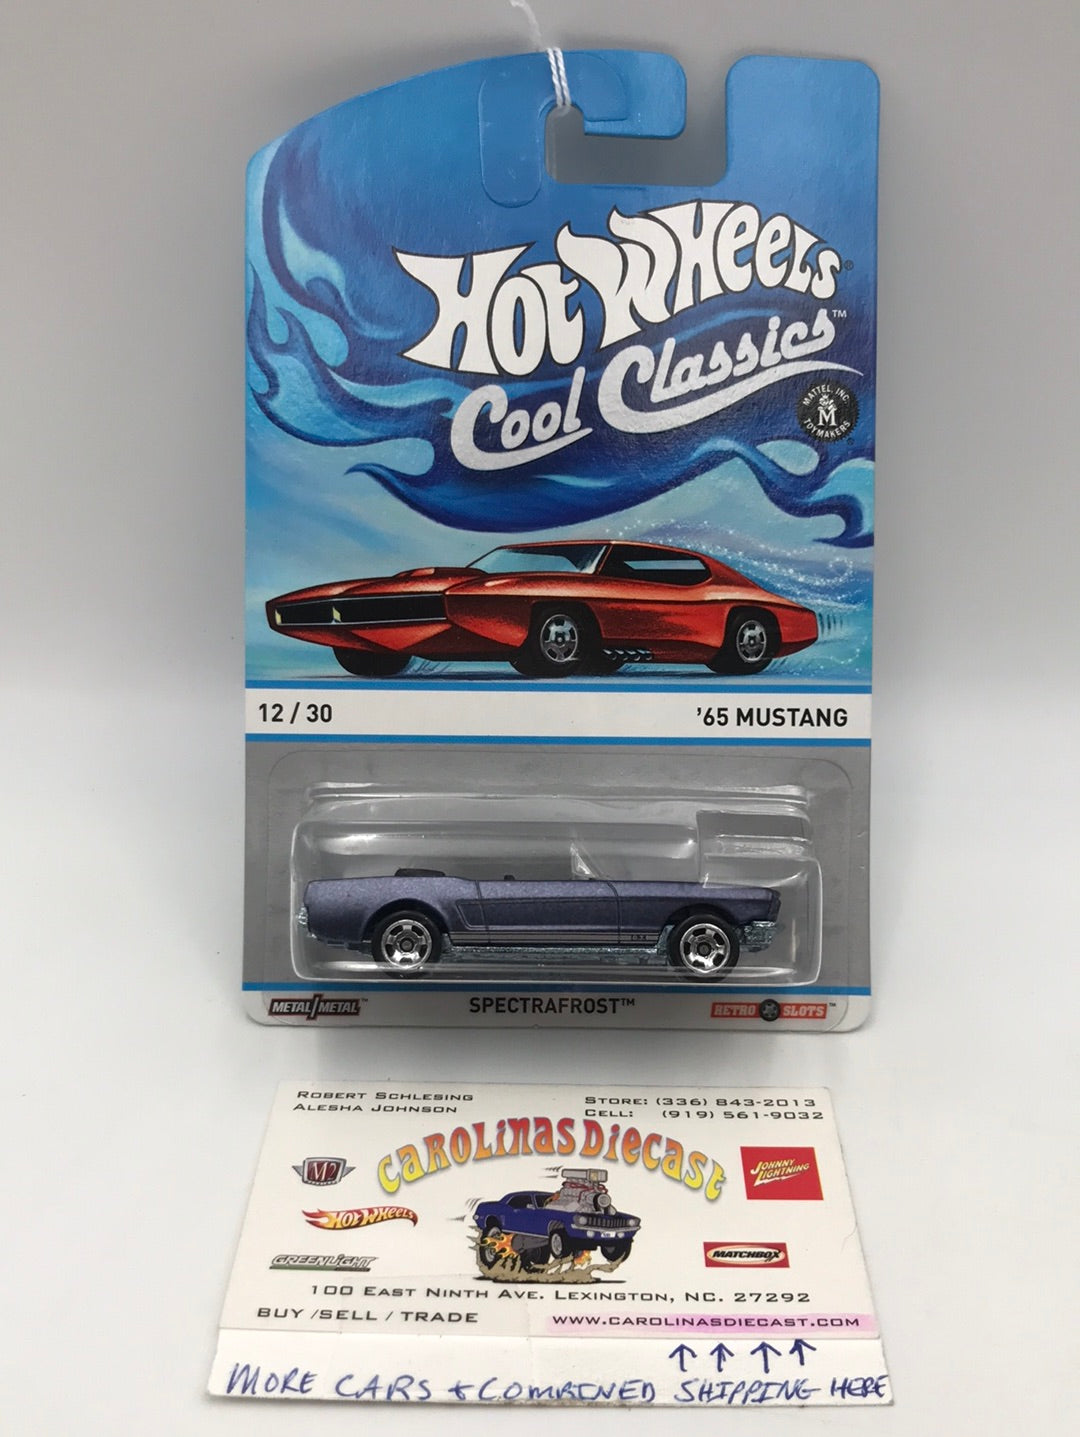 Hot wheels cool classics 65 Mustang 12/30 metal/metal retro slots orange car on card Z6